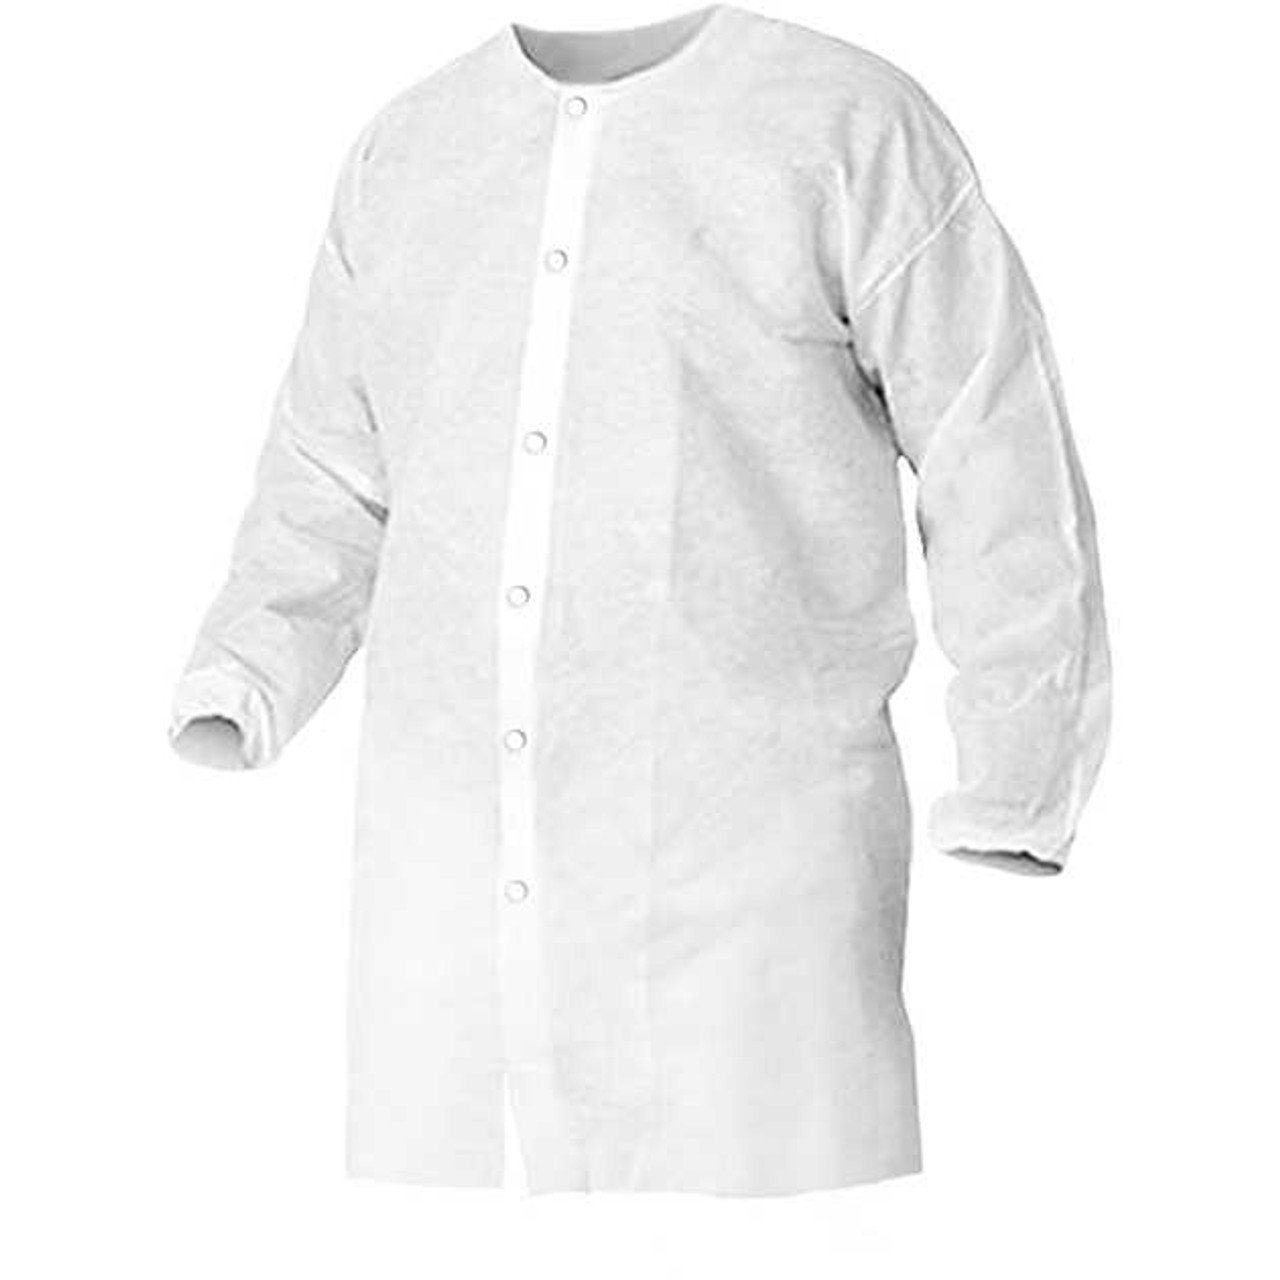 CoverMe™ Polypropylene Shirt, White (50 shirts / case)